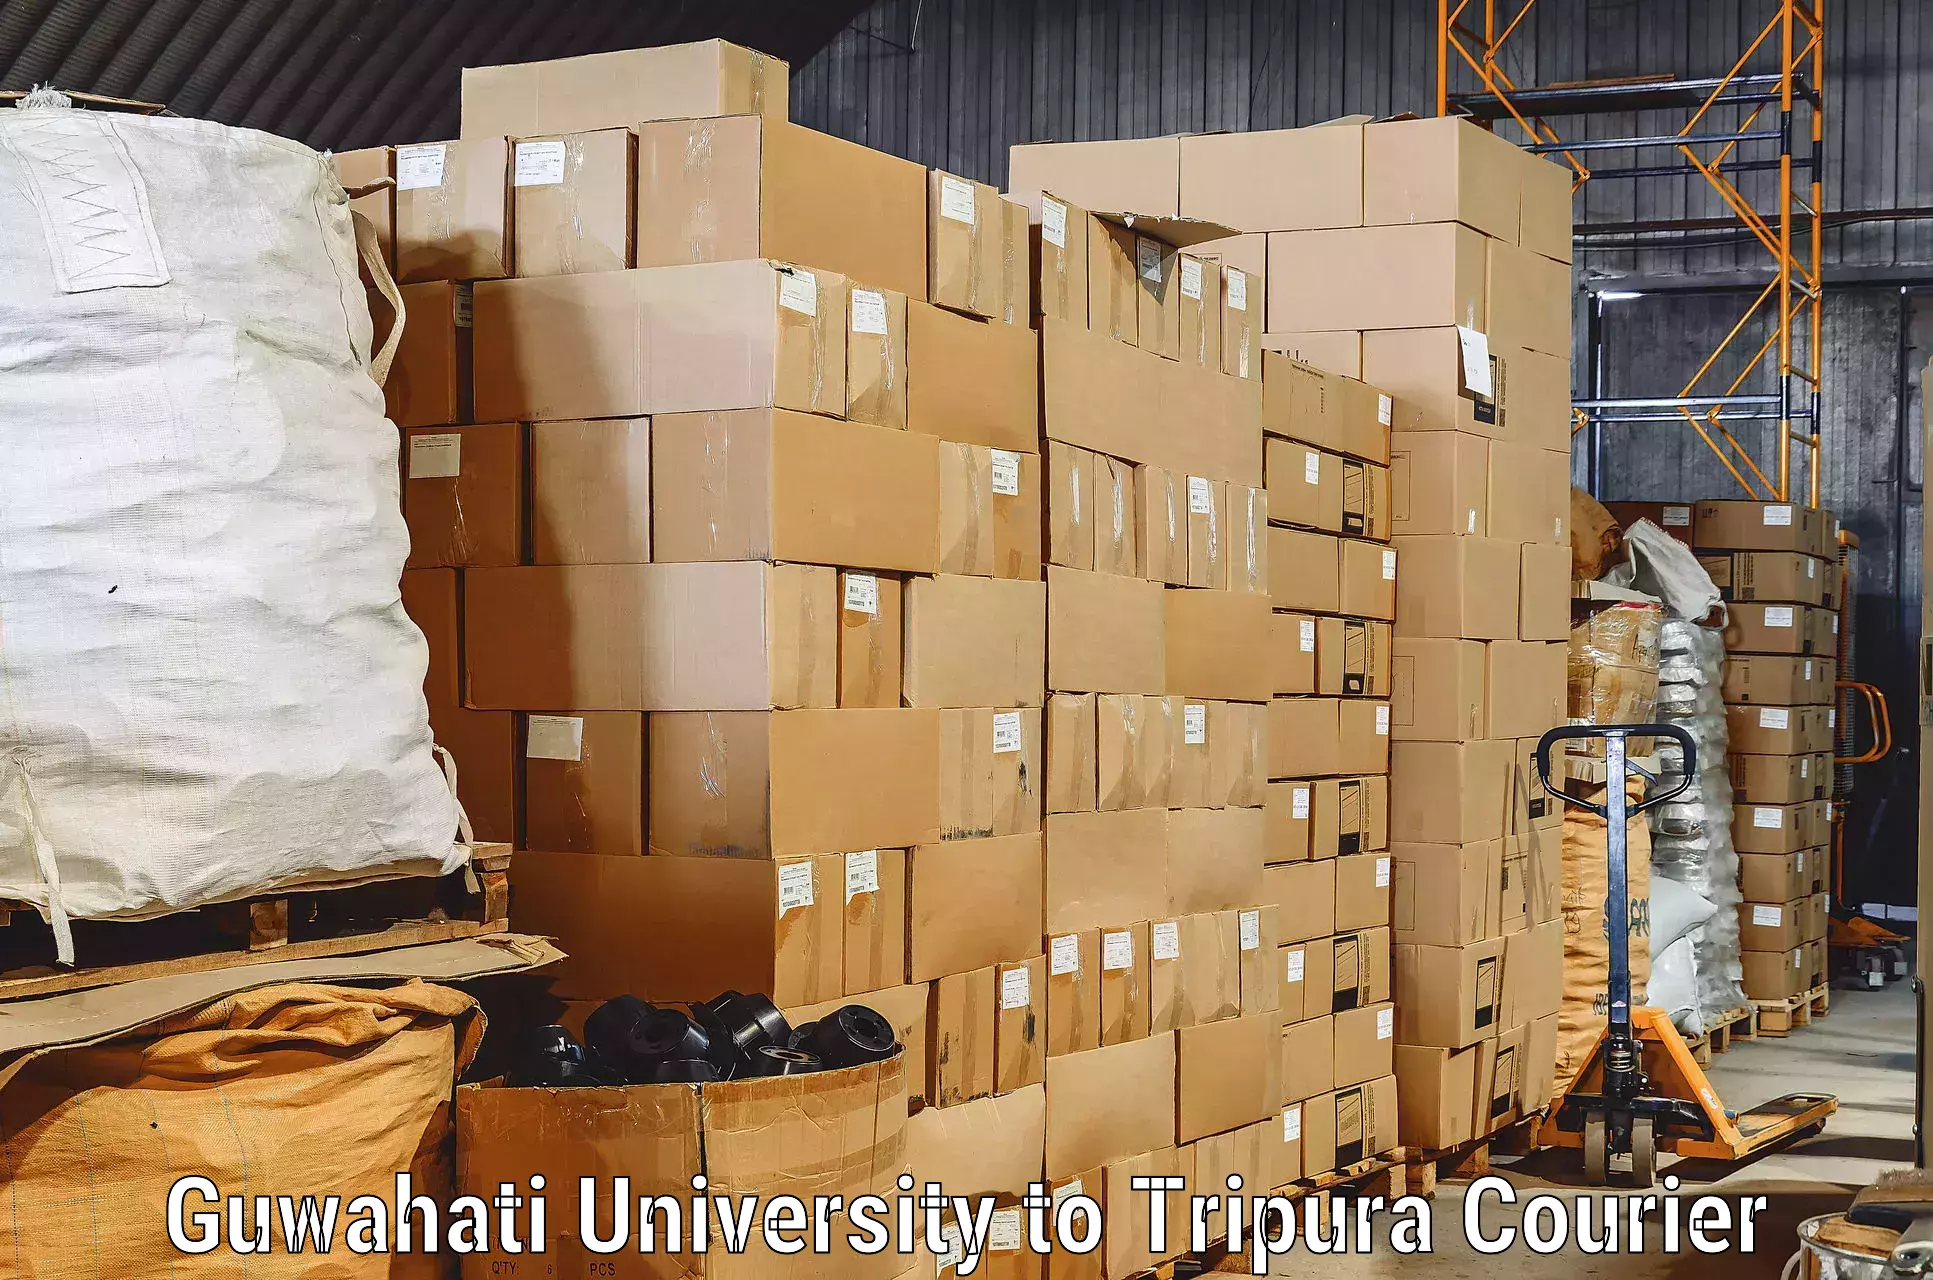 Moving and packing experts Guwahati University to Tripura